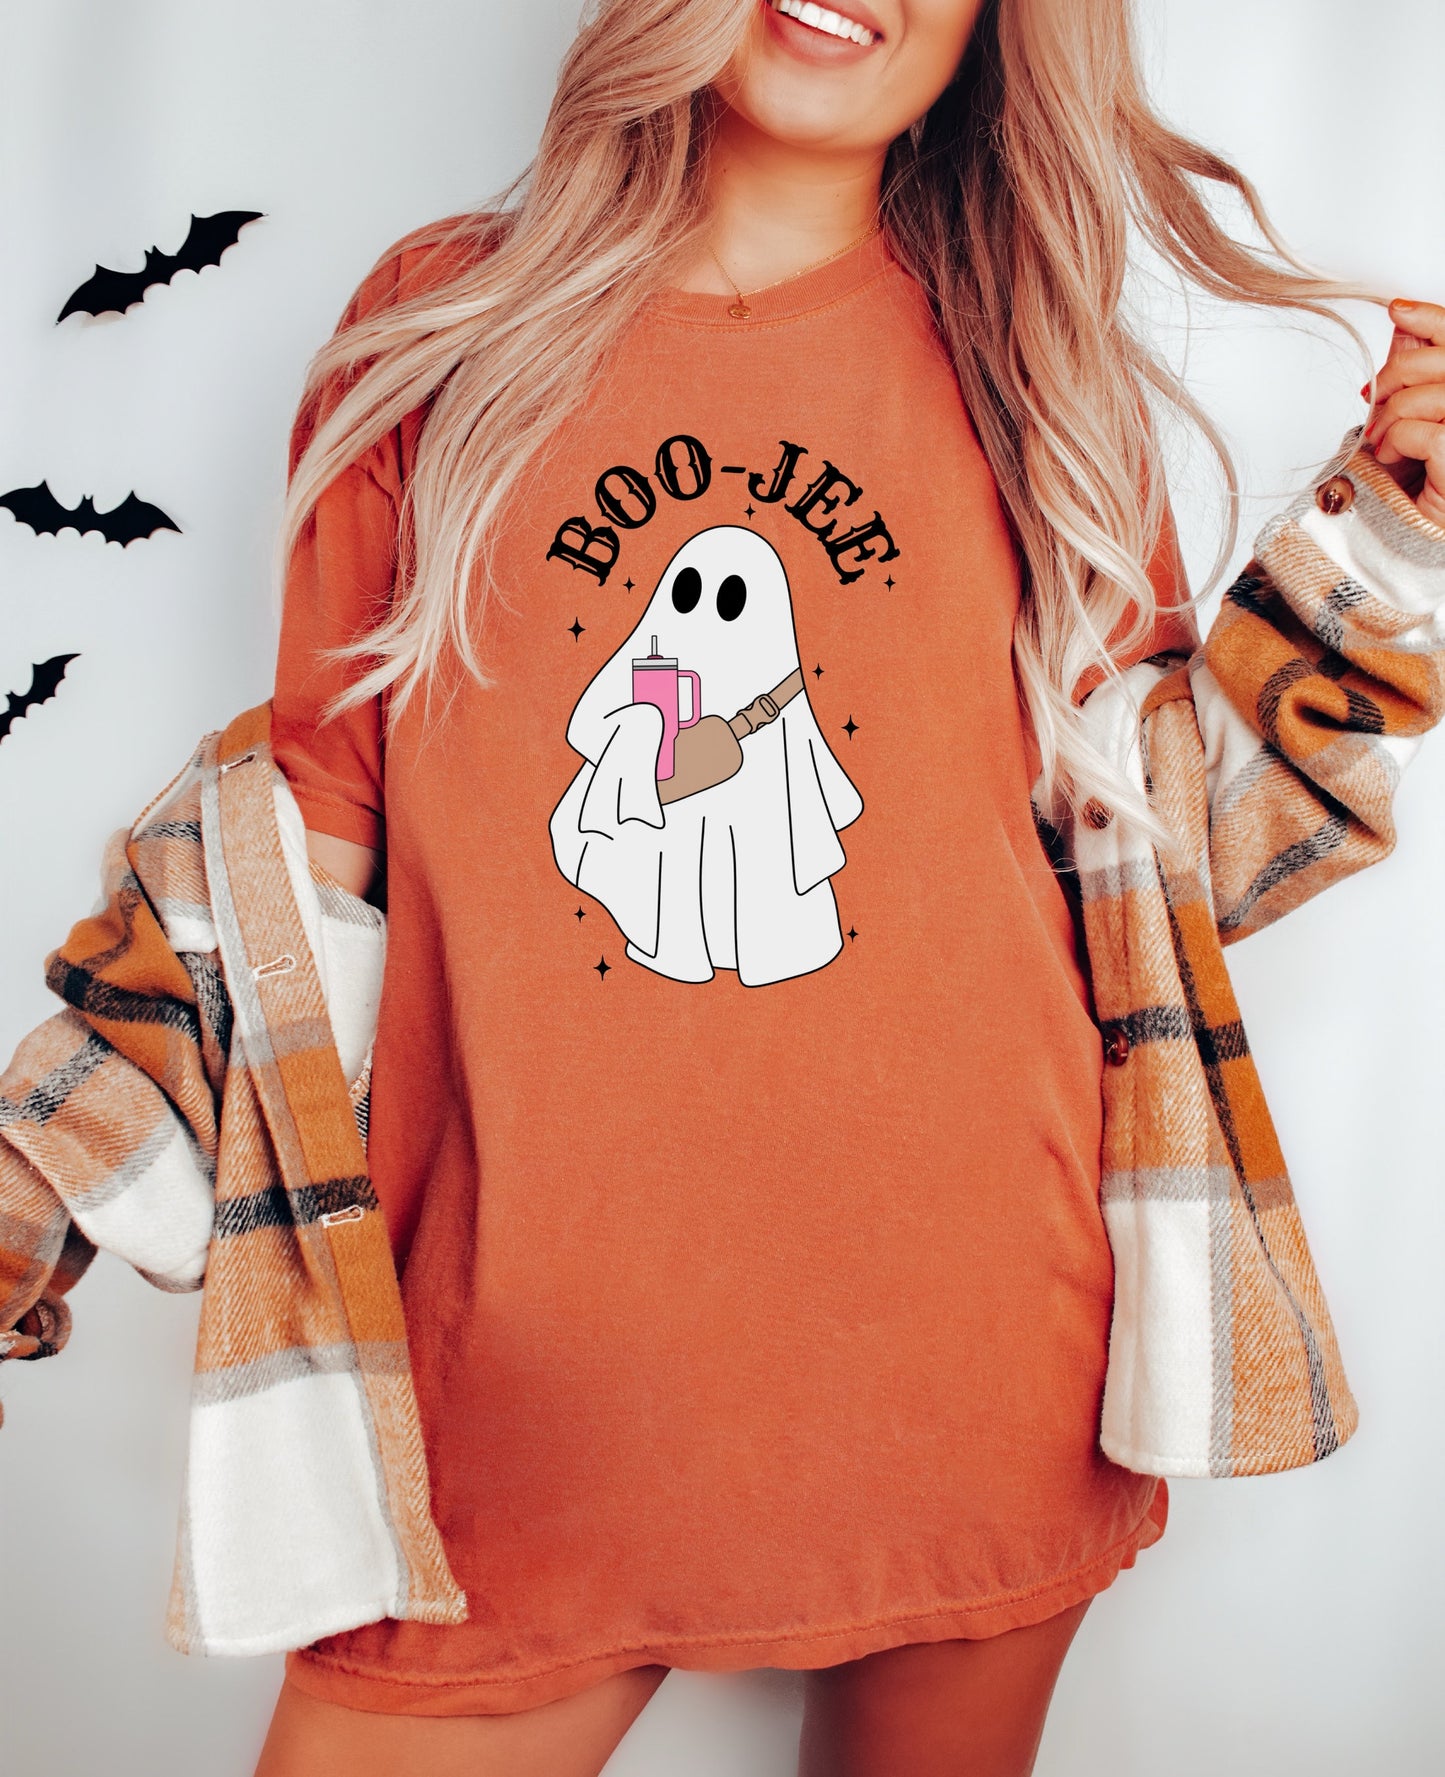 Boo Jee Halloween GhostGildan Sweathshirt